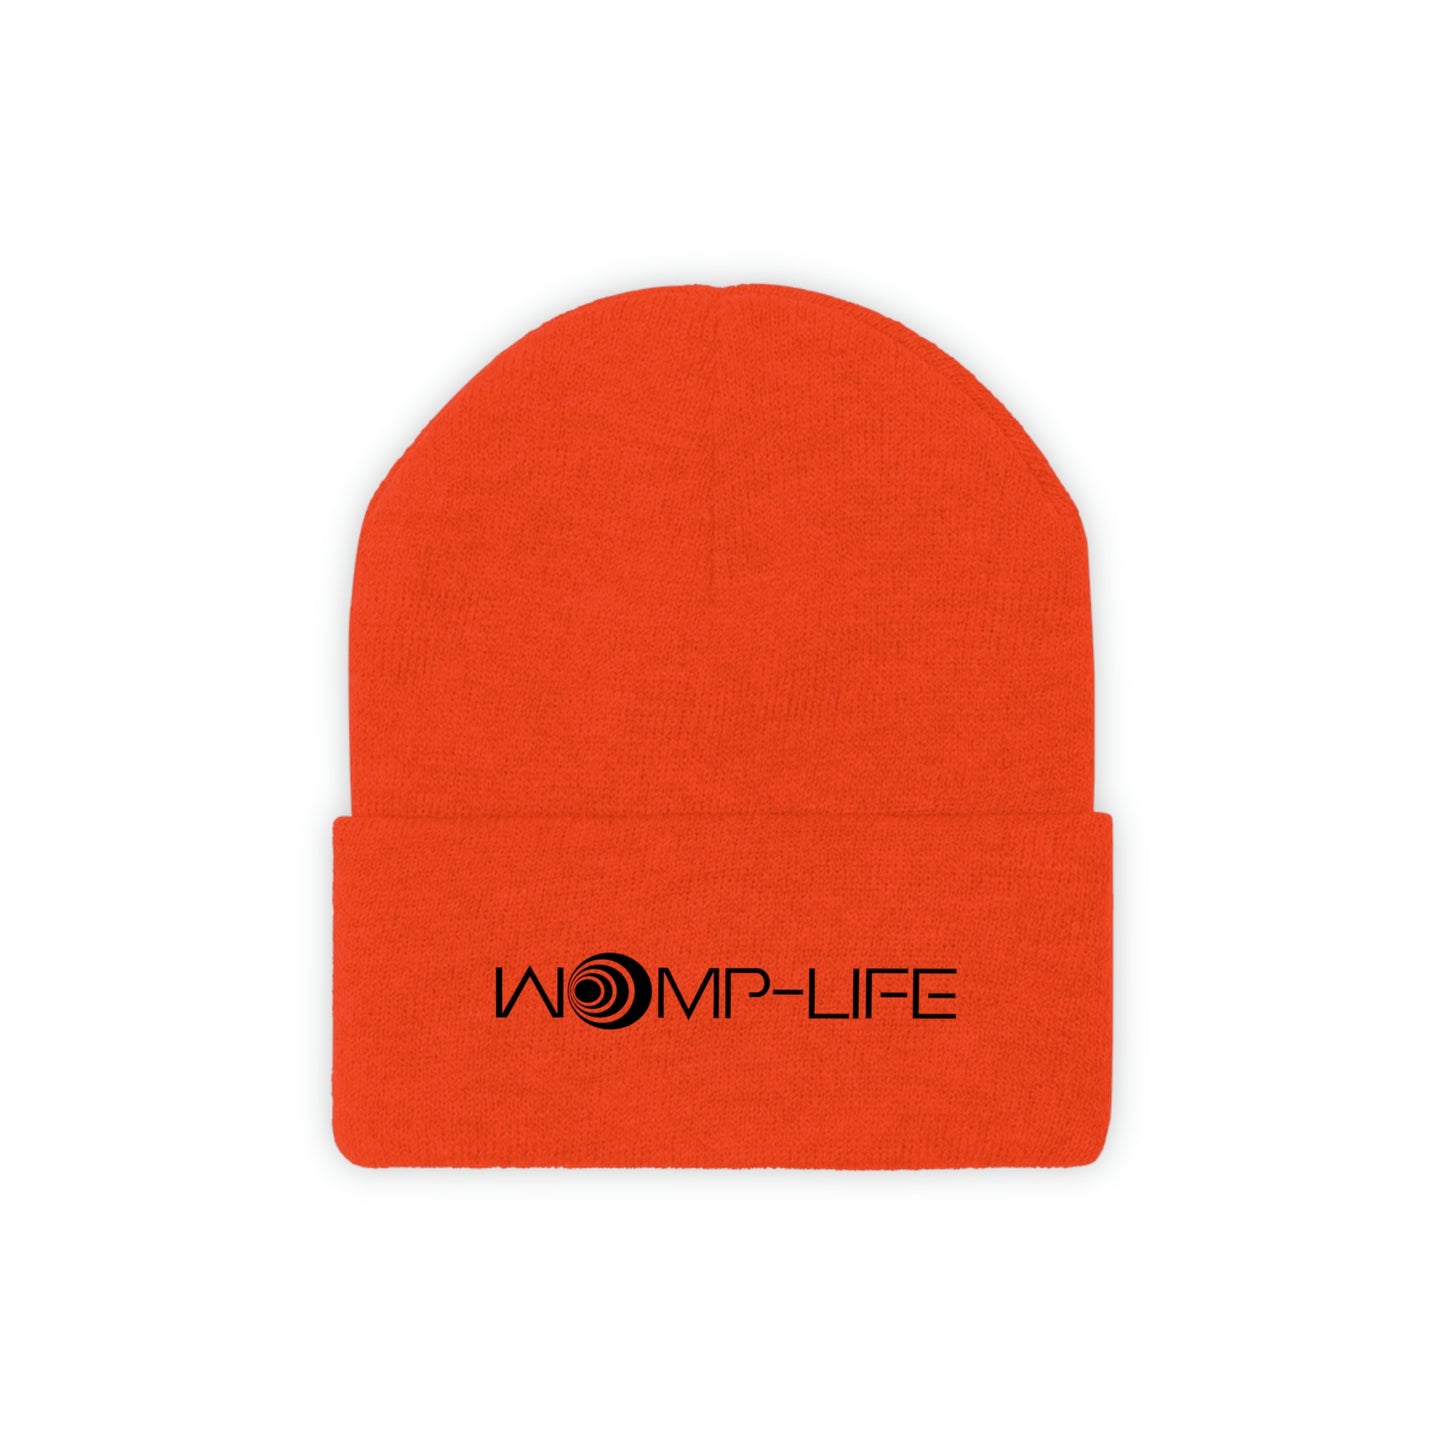 Womp-Life Knit Beanie